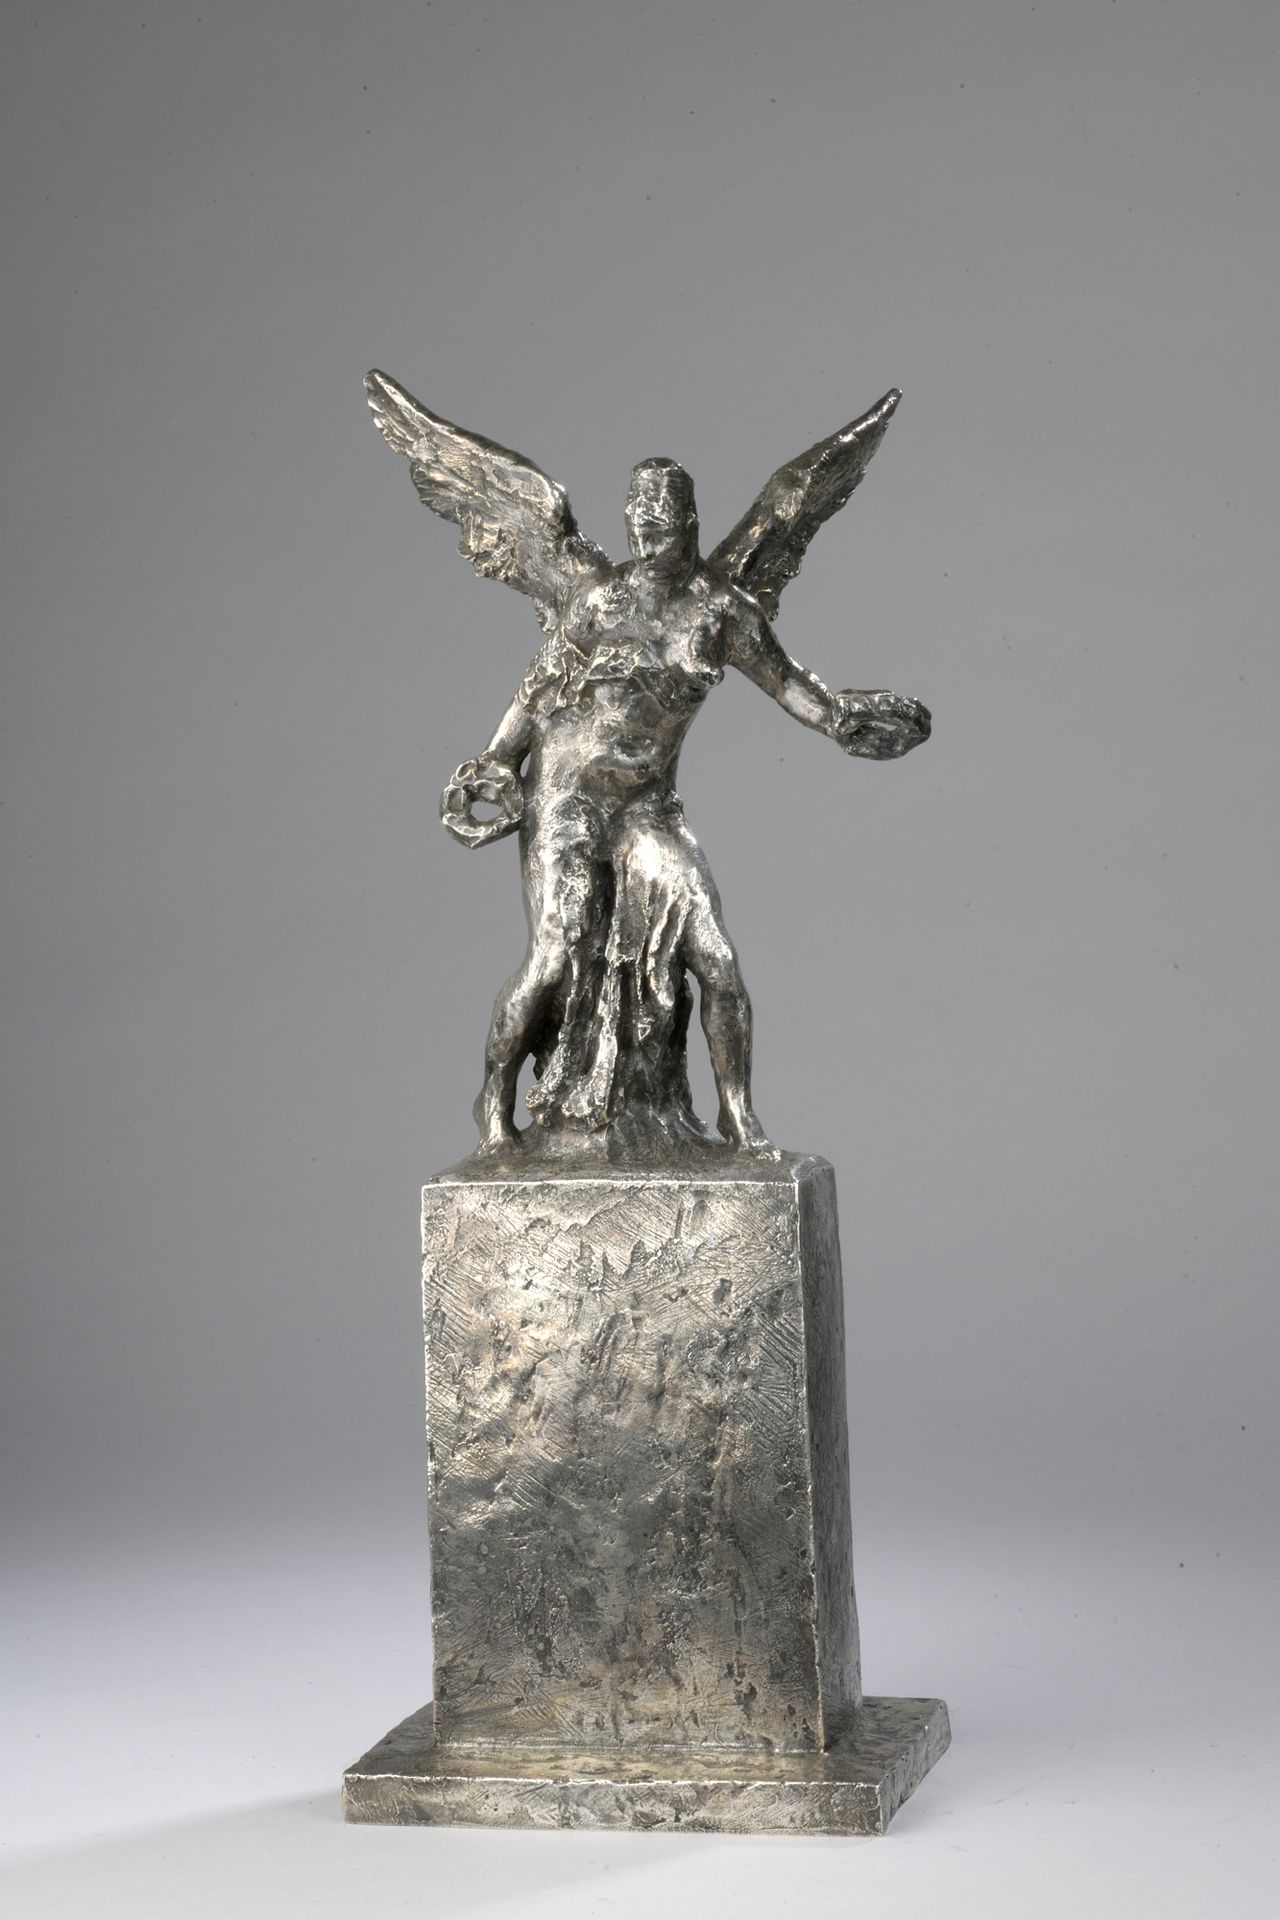 Null 雷蒙德-马丁 (1910-1992)

有翼的胜利

带有银色铜锈的青铜器。

在露台上签名的雷蒙德-马丁。

盖有创始人的印章 C．VALSUANI&hellip;